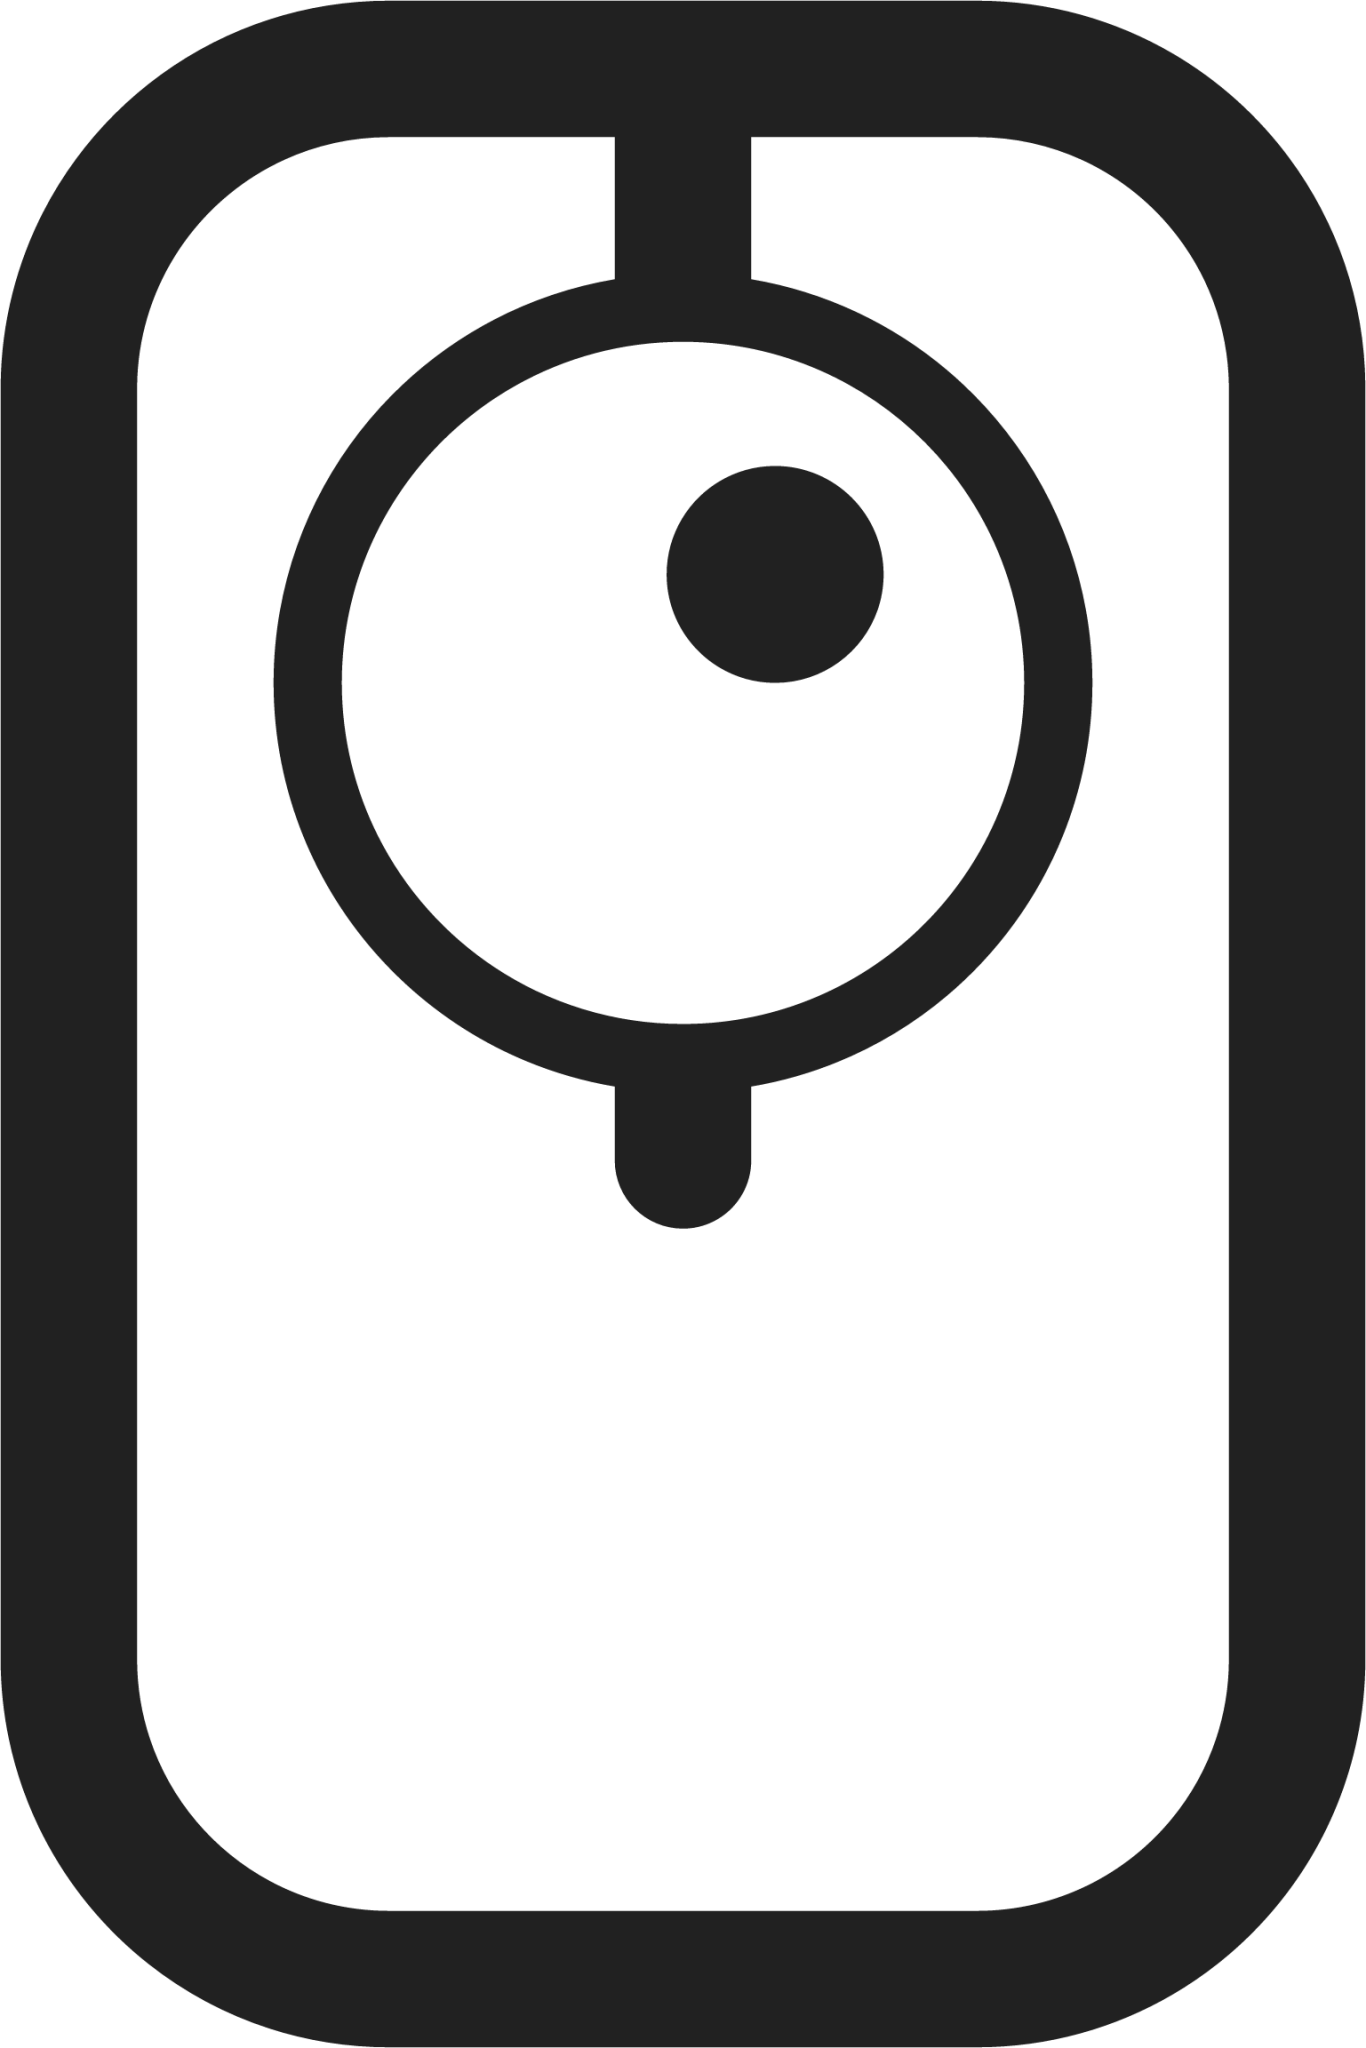 trackball emoji